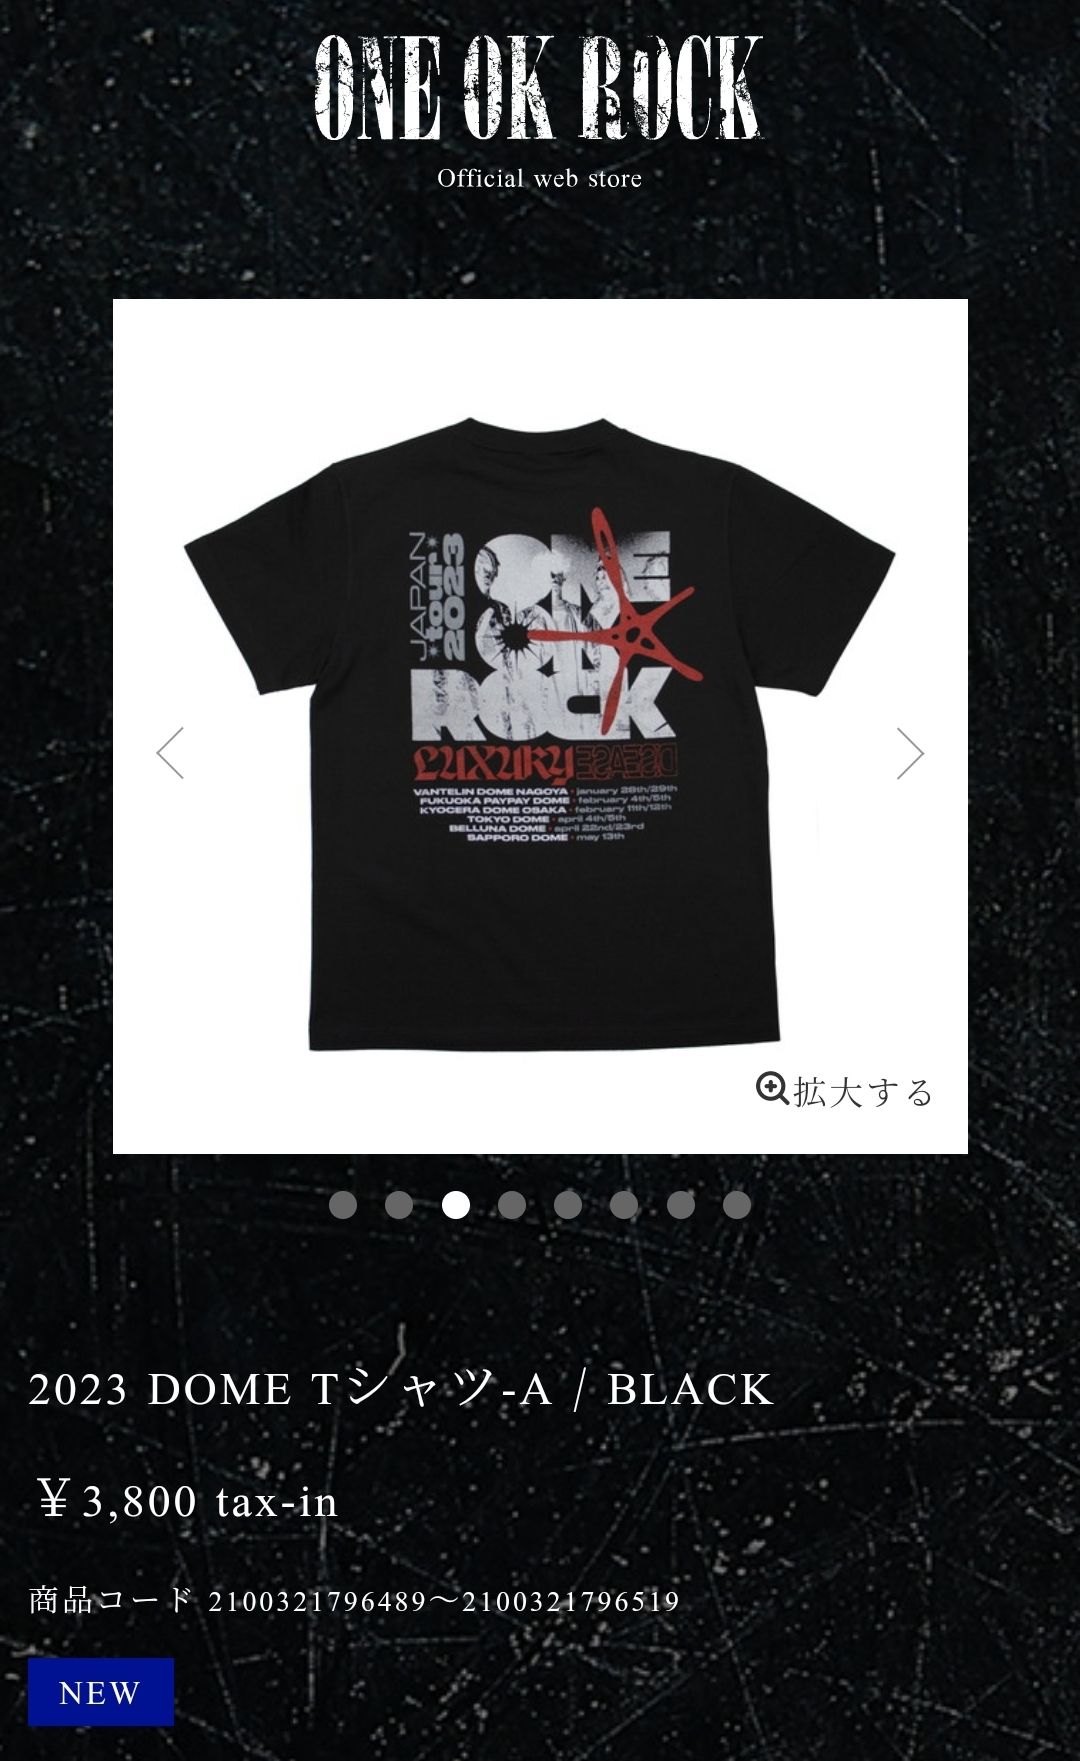 ONE OK ROCK LUXURY DISEASE SHIRT IN XL | Request Details